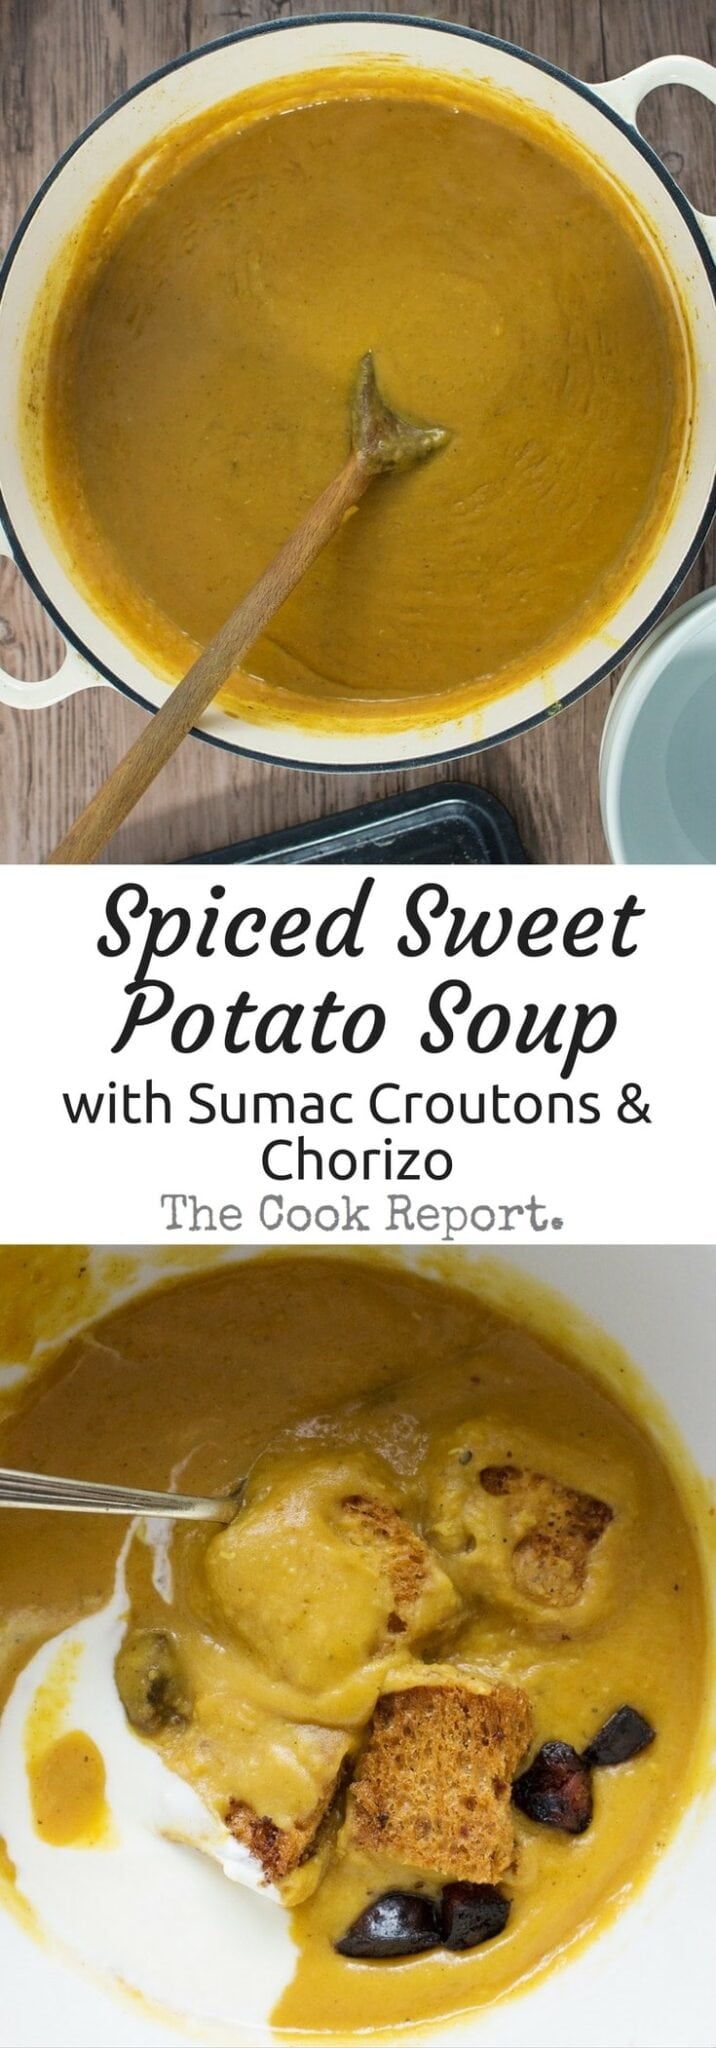 Spiced Sweet Potato Soup, Sumac Croutons & Chorizo • The Cook Report